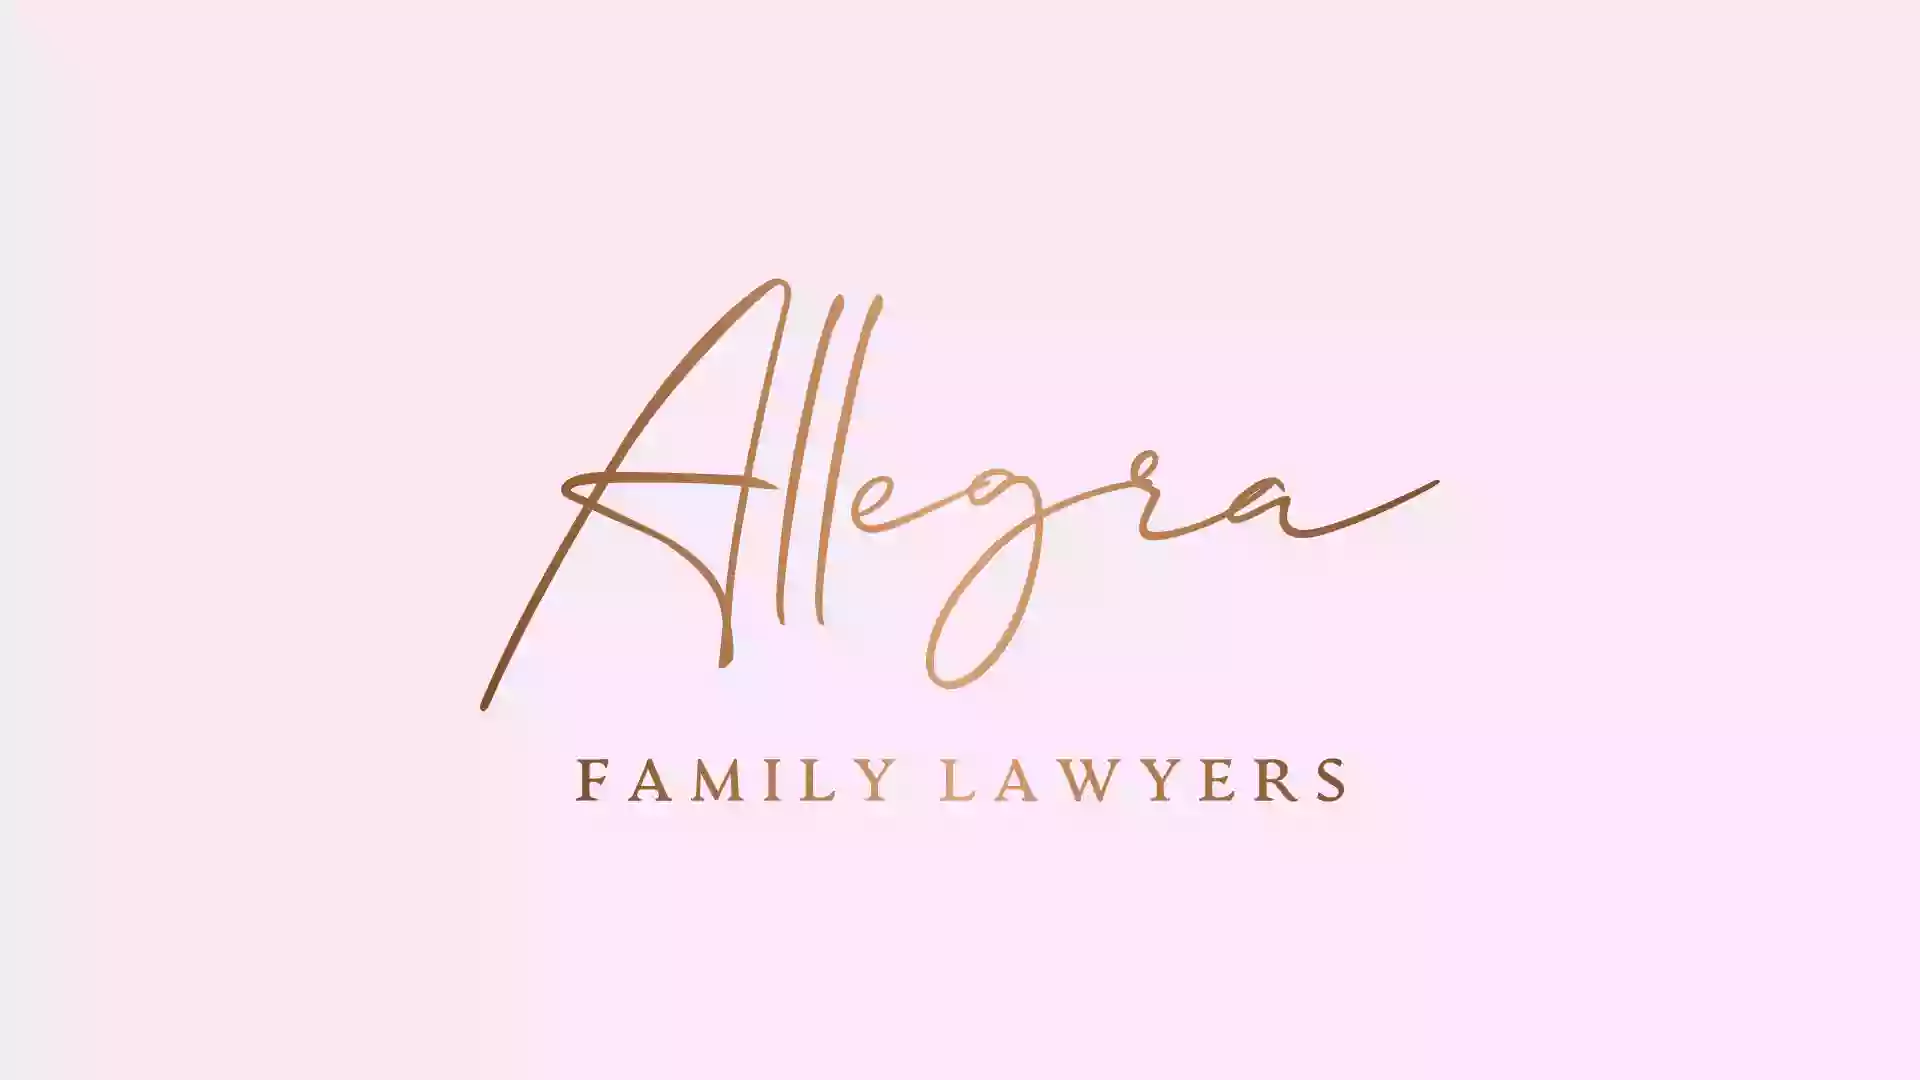 Allegra Family Lawyers